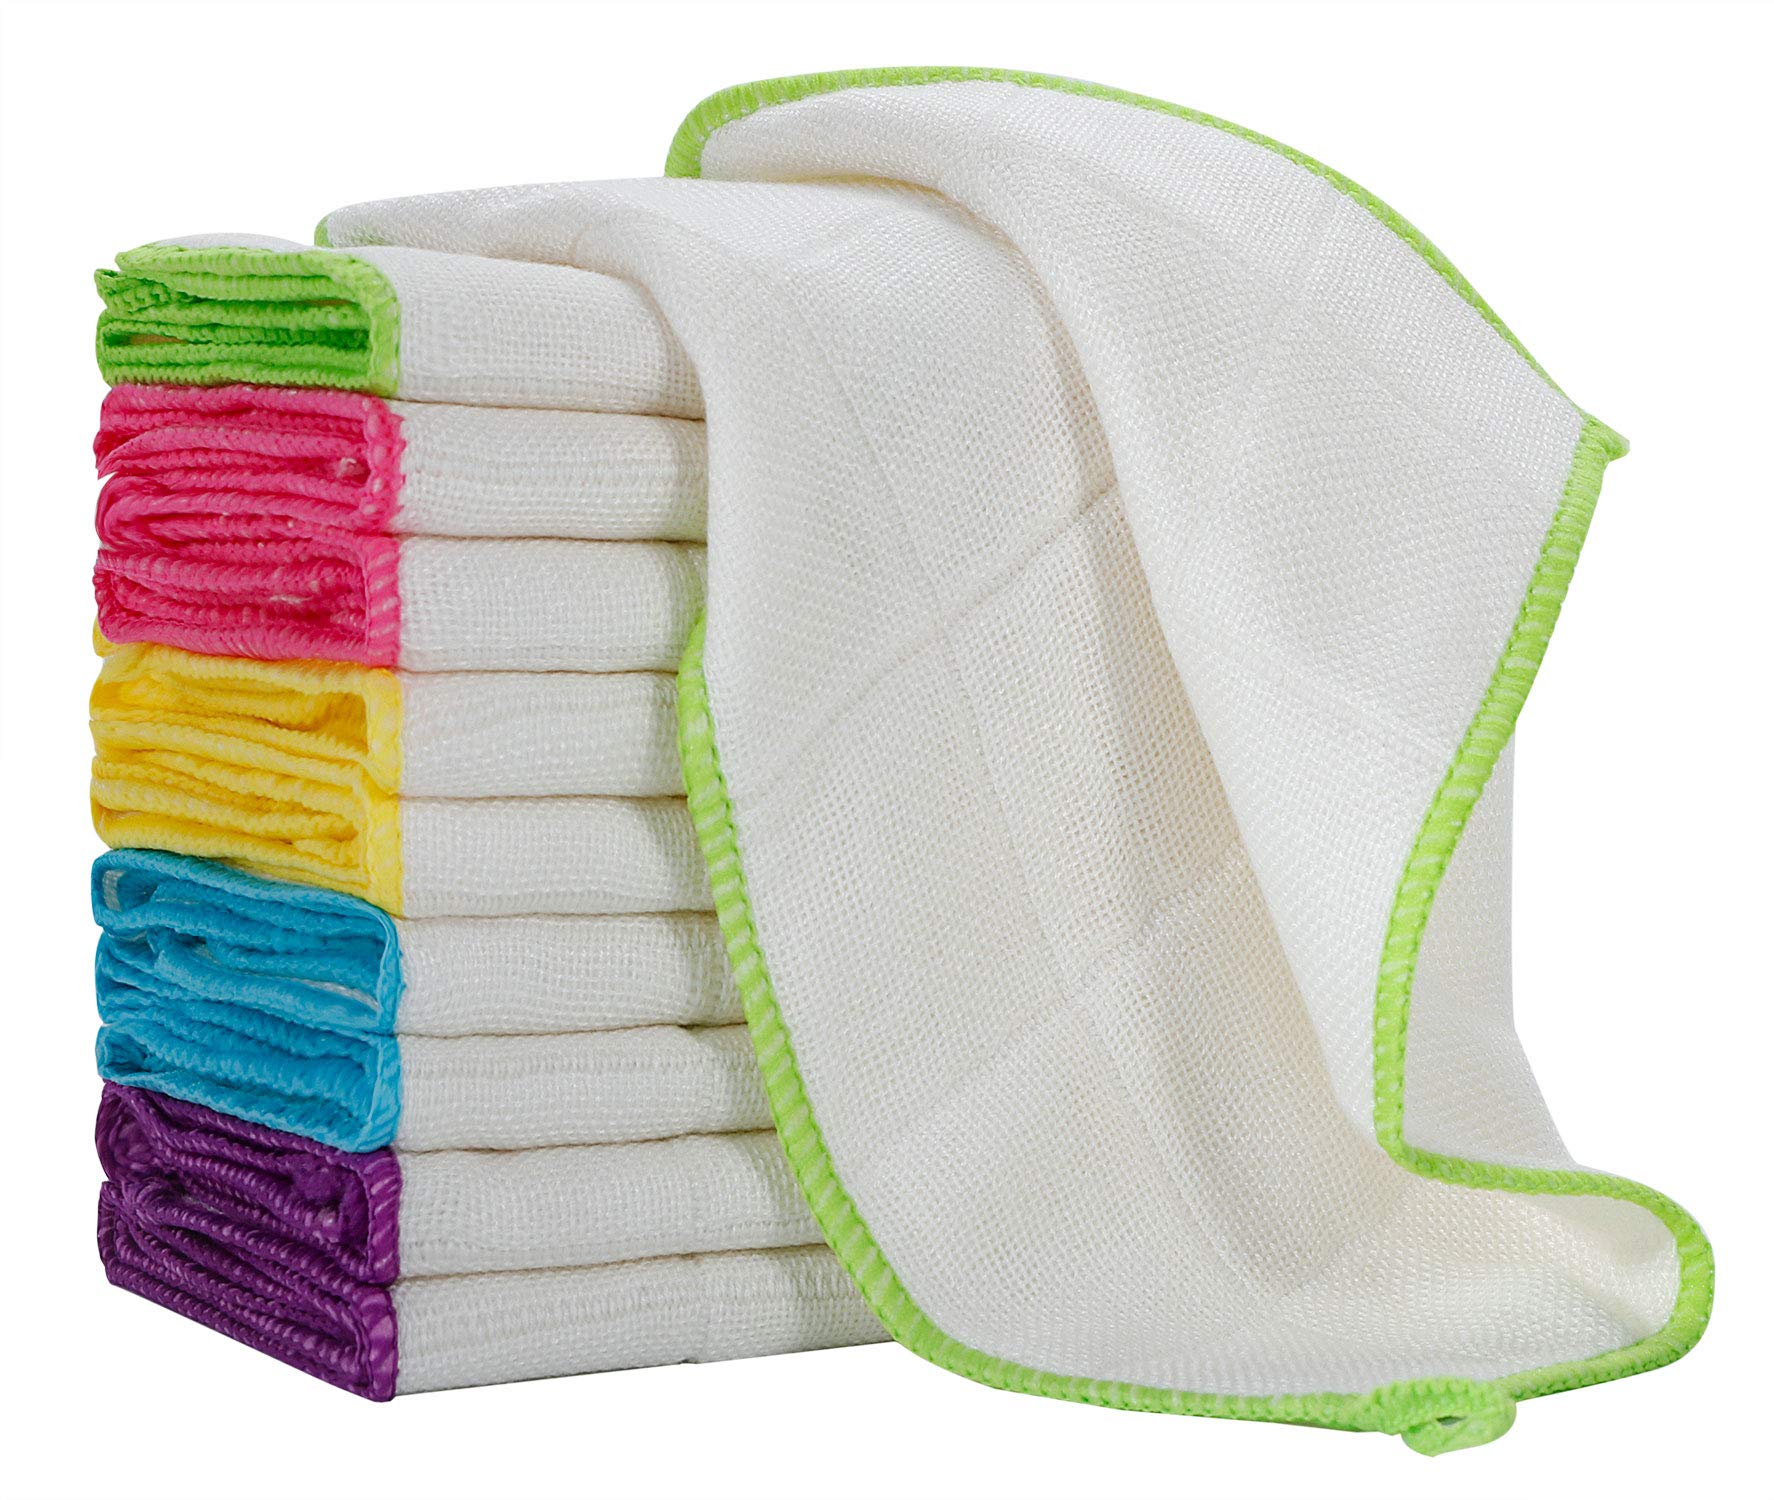 EliteBond Bamboo Dish Cloths Towels Kitchen Cloths for Cleaning Dishcloths for Kitchen Washable Absorbent Machine Washable 12" x 12" 10PCS